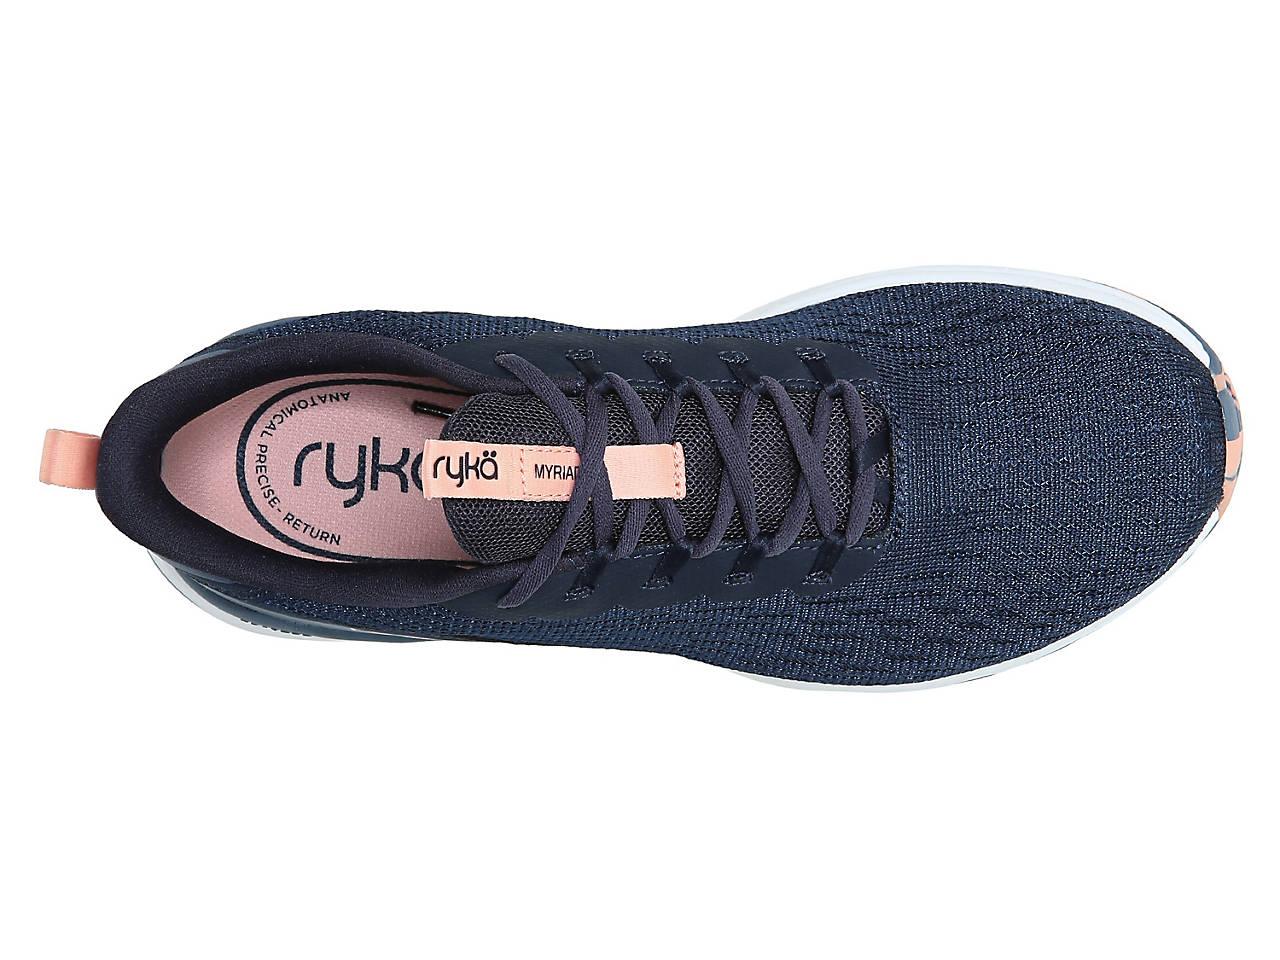 Ryka Synthetic Myriad Walking Shoe in Navy (Blue) - Lyst